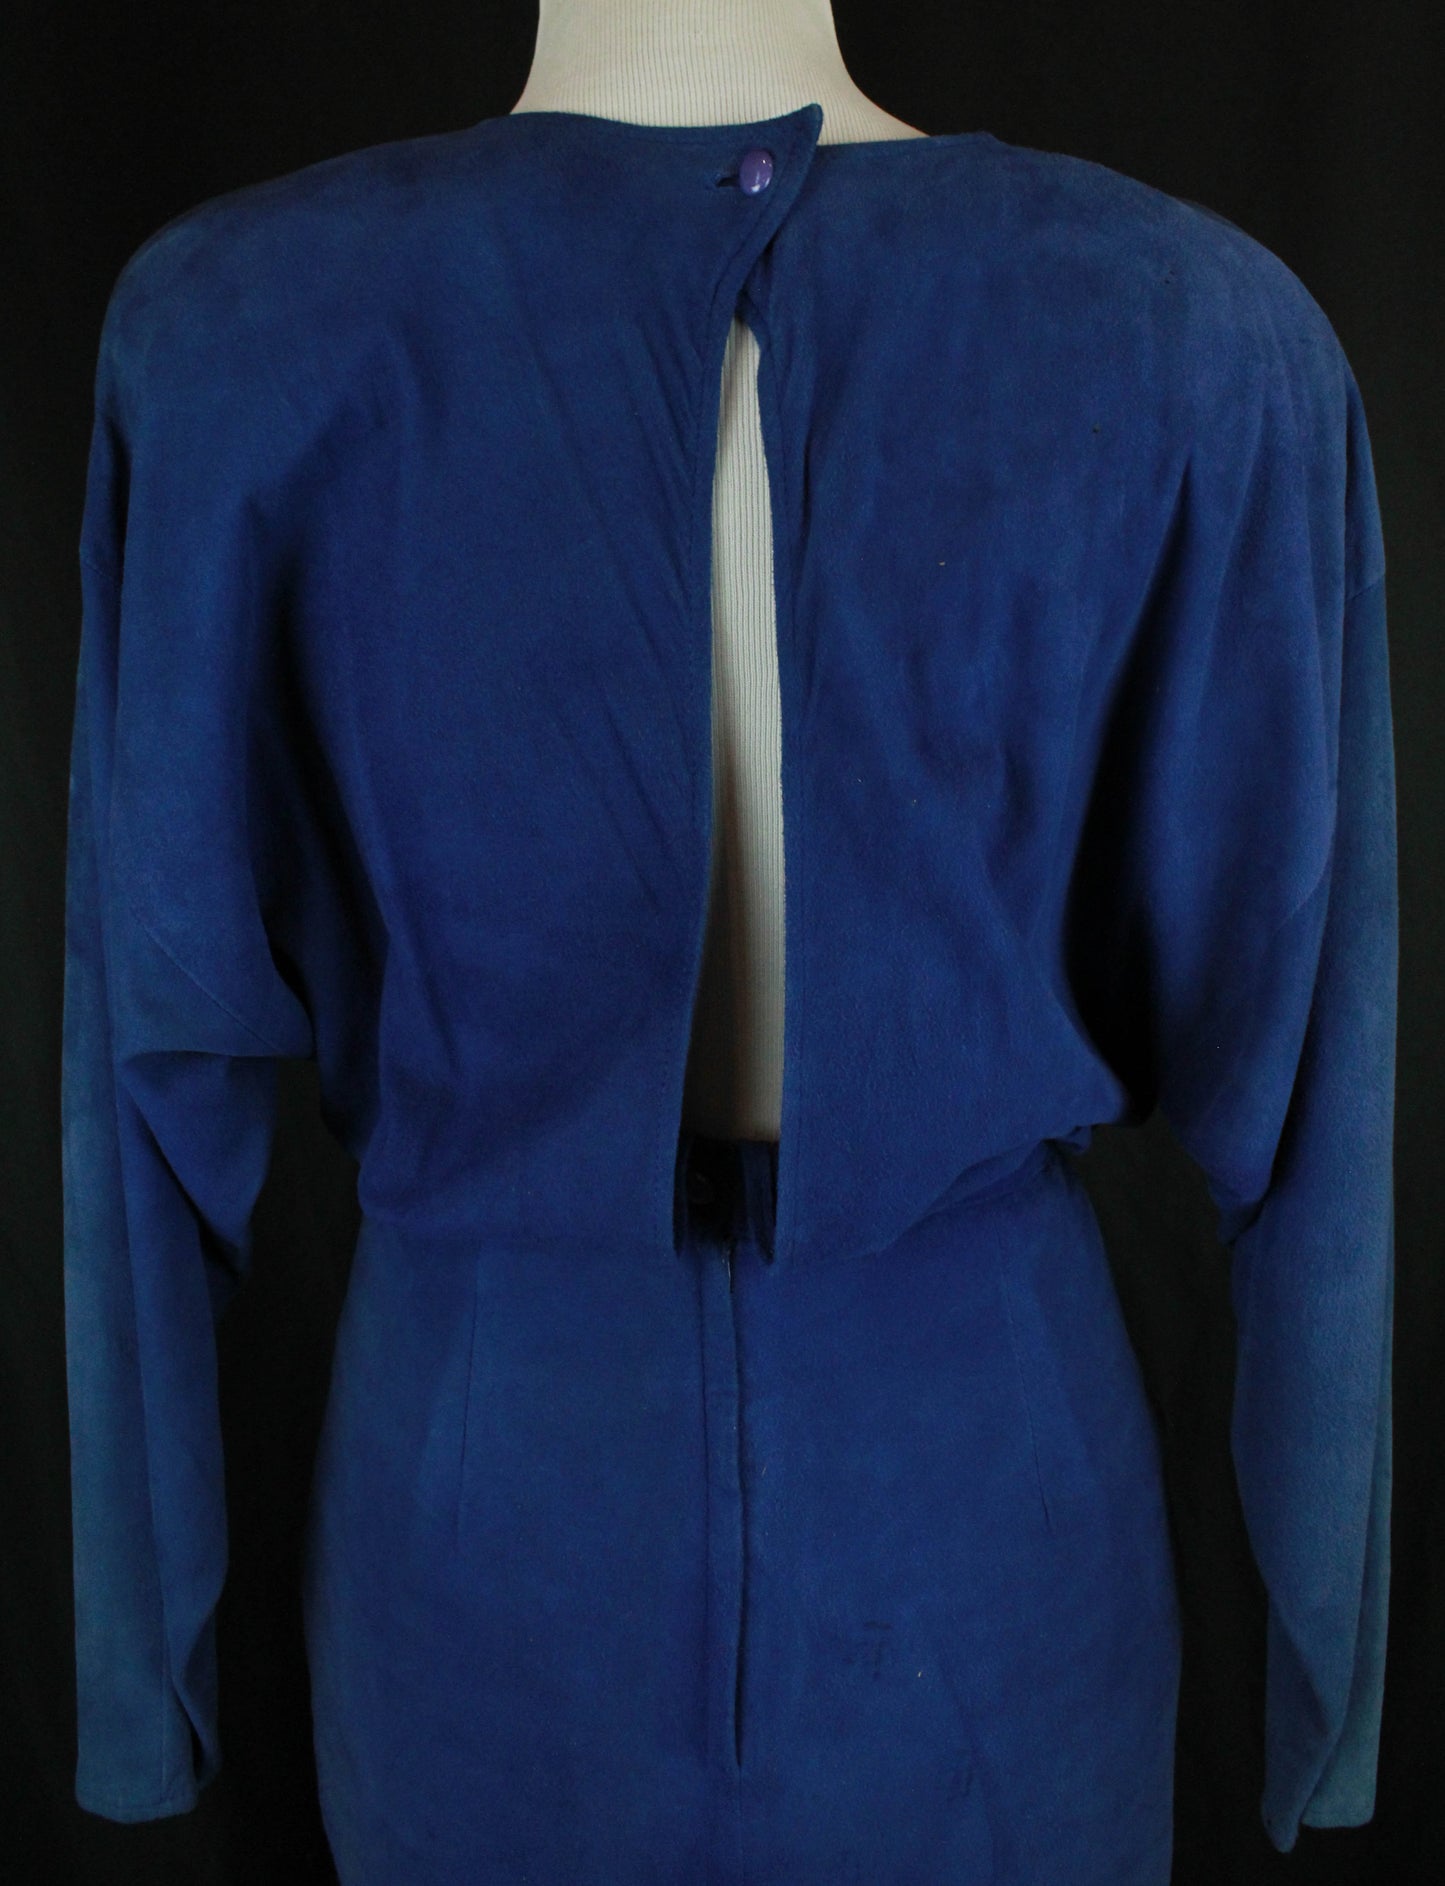 Women's Vintage 80's Blue Suede Maxi Dress - Small/26W